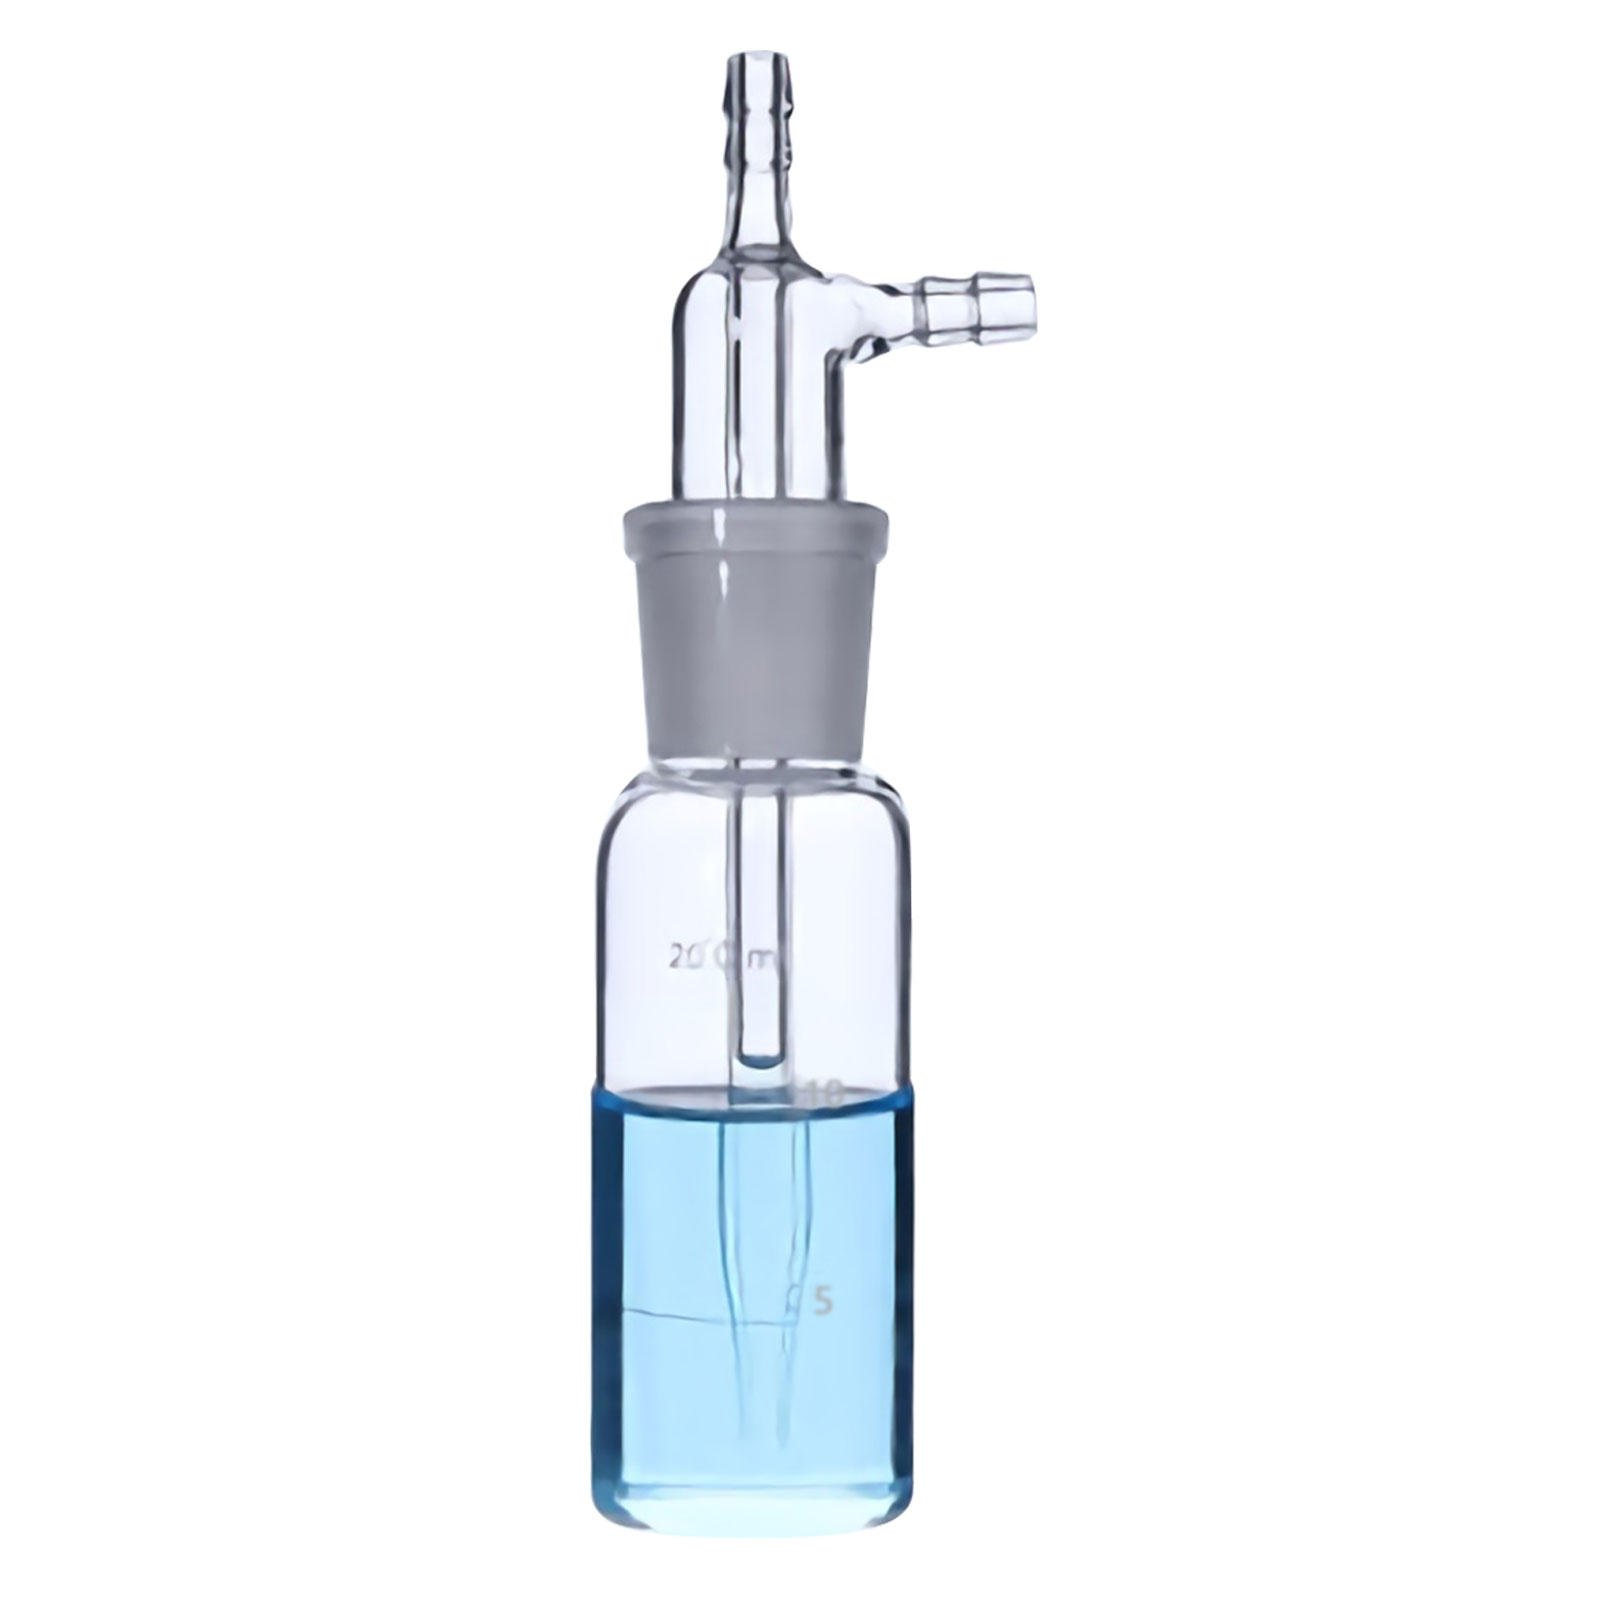 ADAMAS BETA Impact Glass Absorption Bottle 10-250ml Graduated Grinding Mouth Laboratory Impact Absorber Sampling Bottle